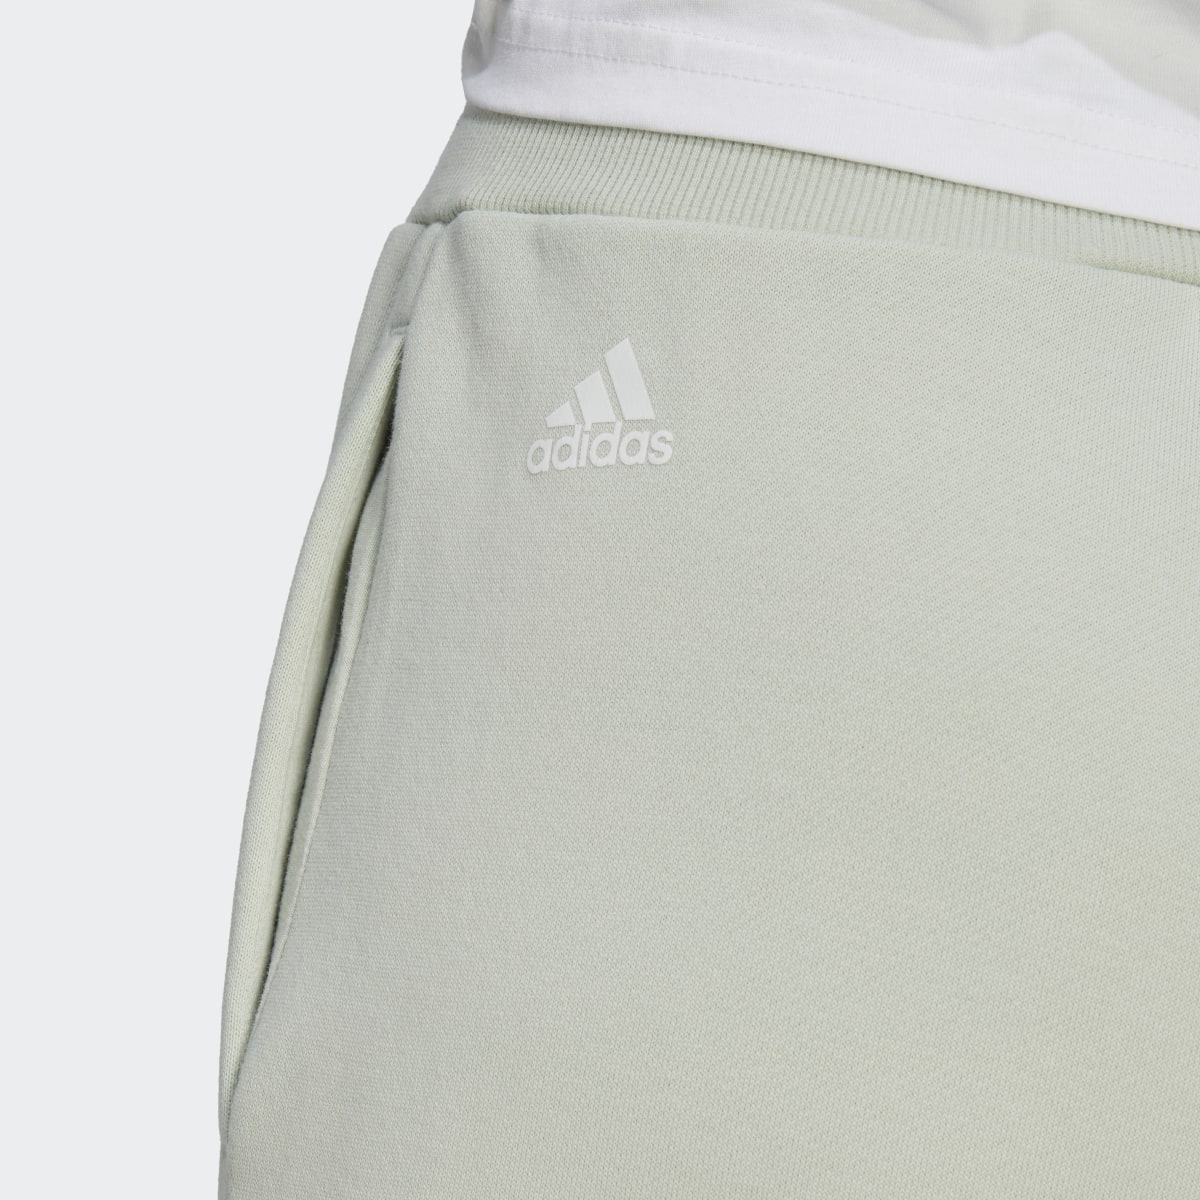 Adidas Essentials Multi-Colored Logo Pants. 5